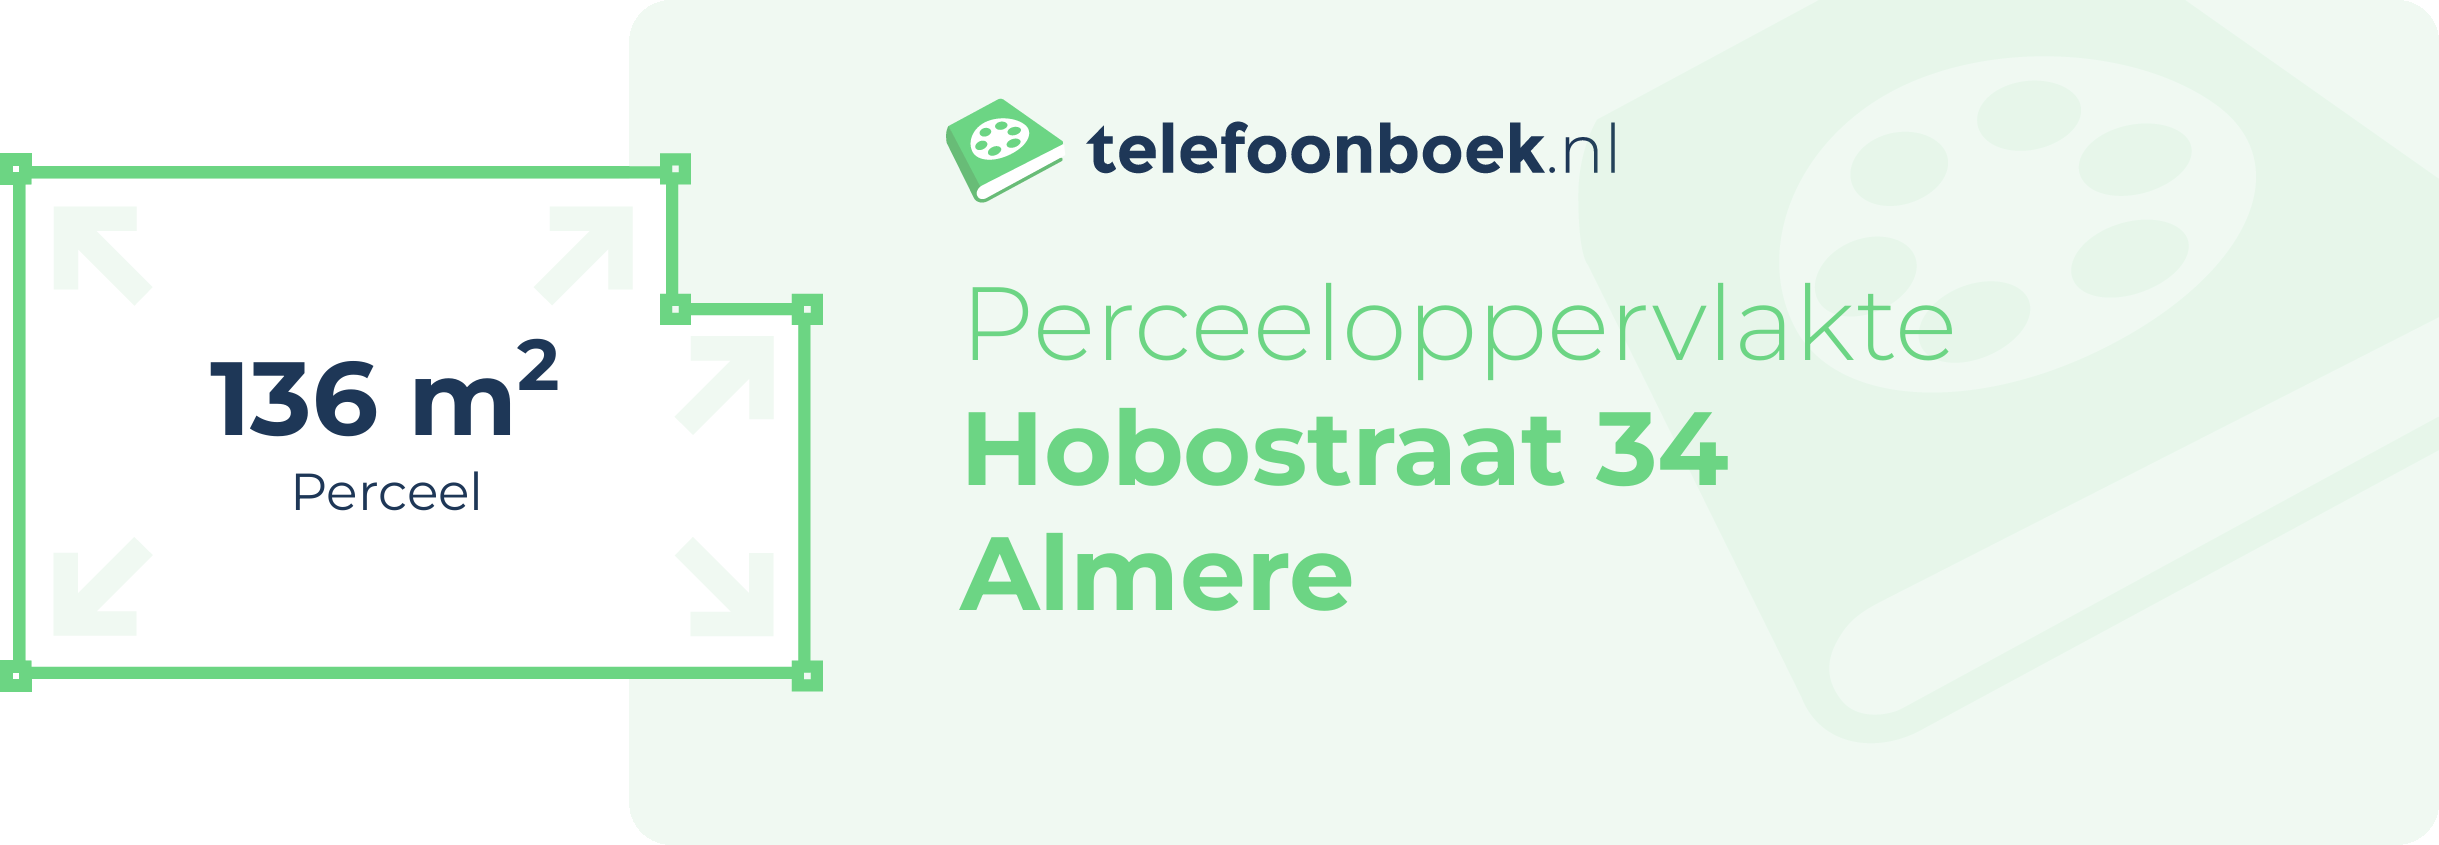 Perceeloppervlakte Hobostraat 34 Almere